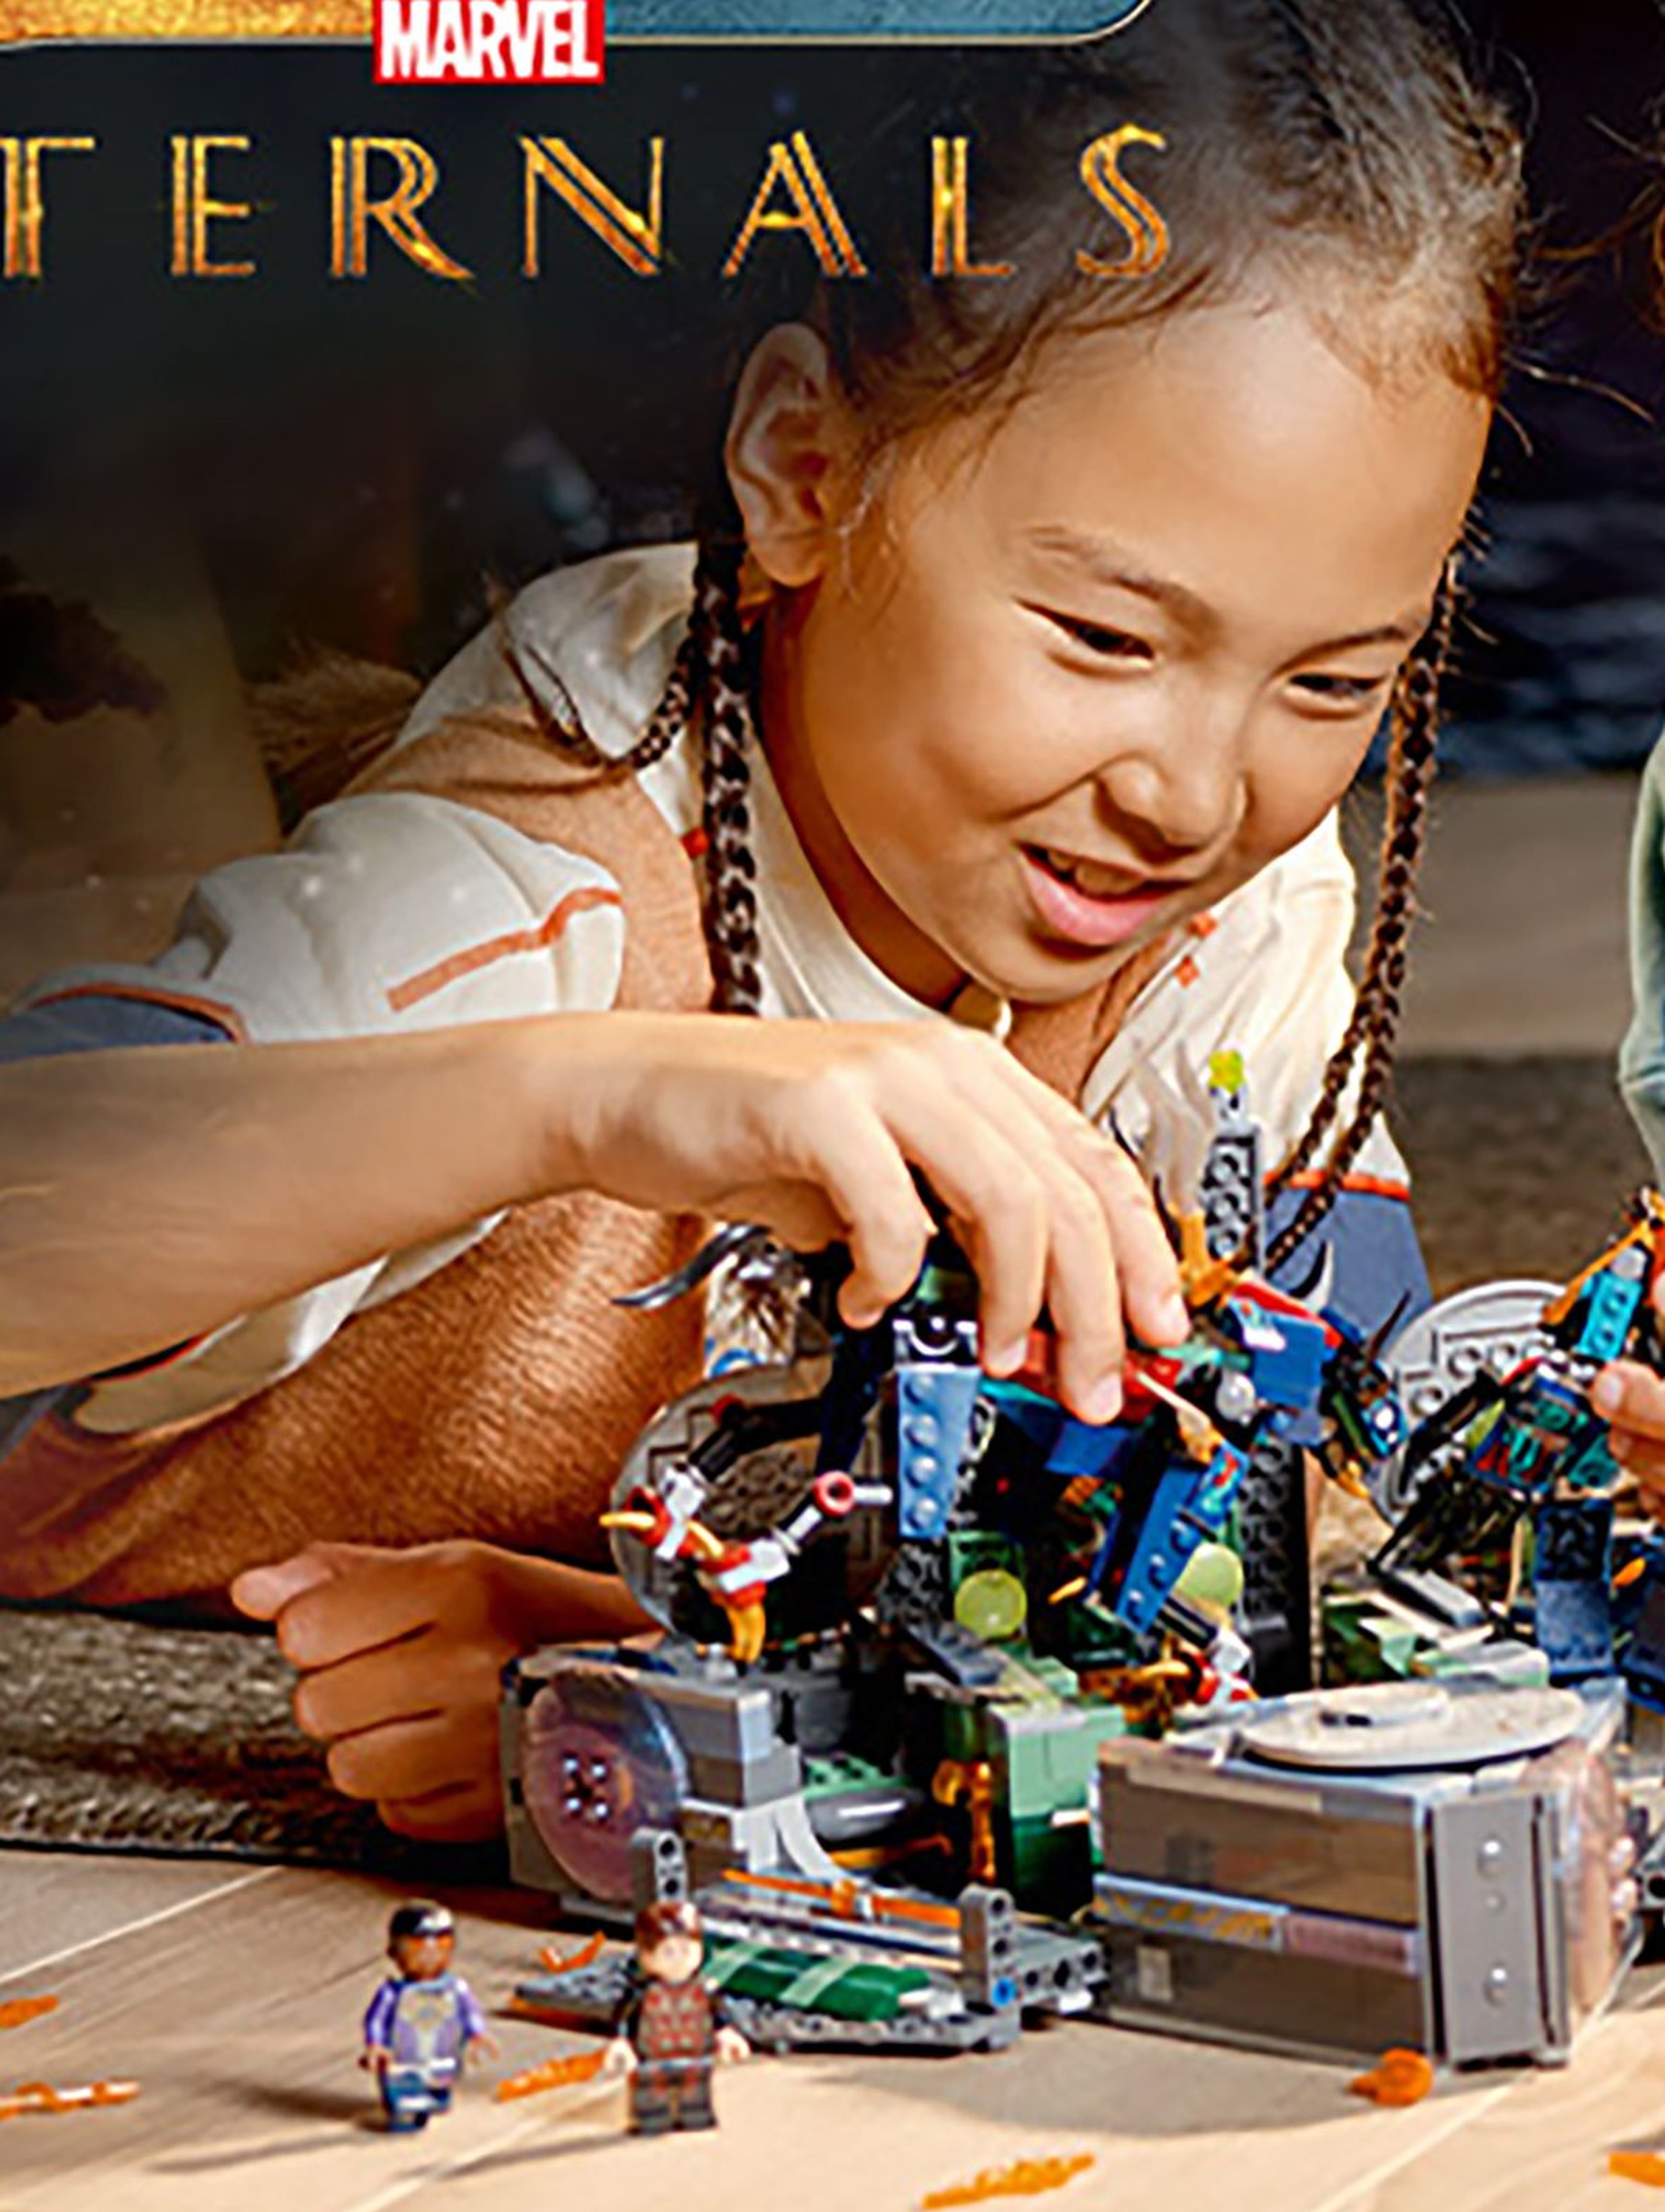 LEGO® Klocki Super Heroes (76156) Domo powstaje